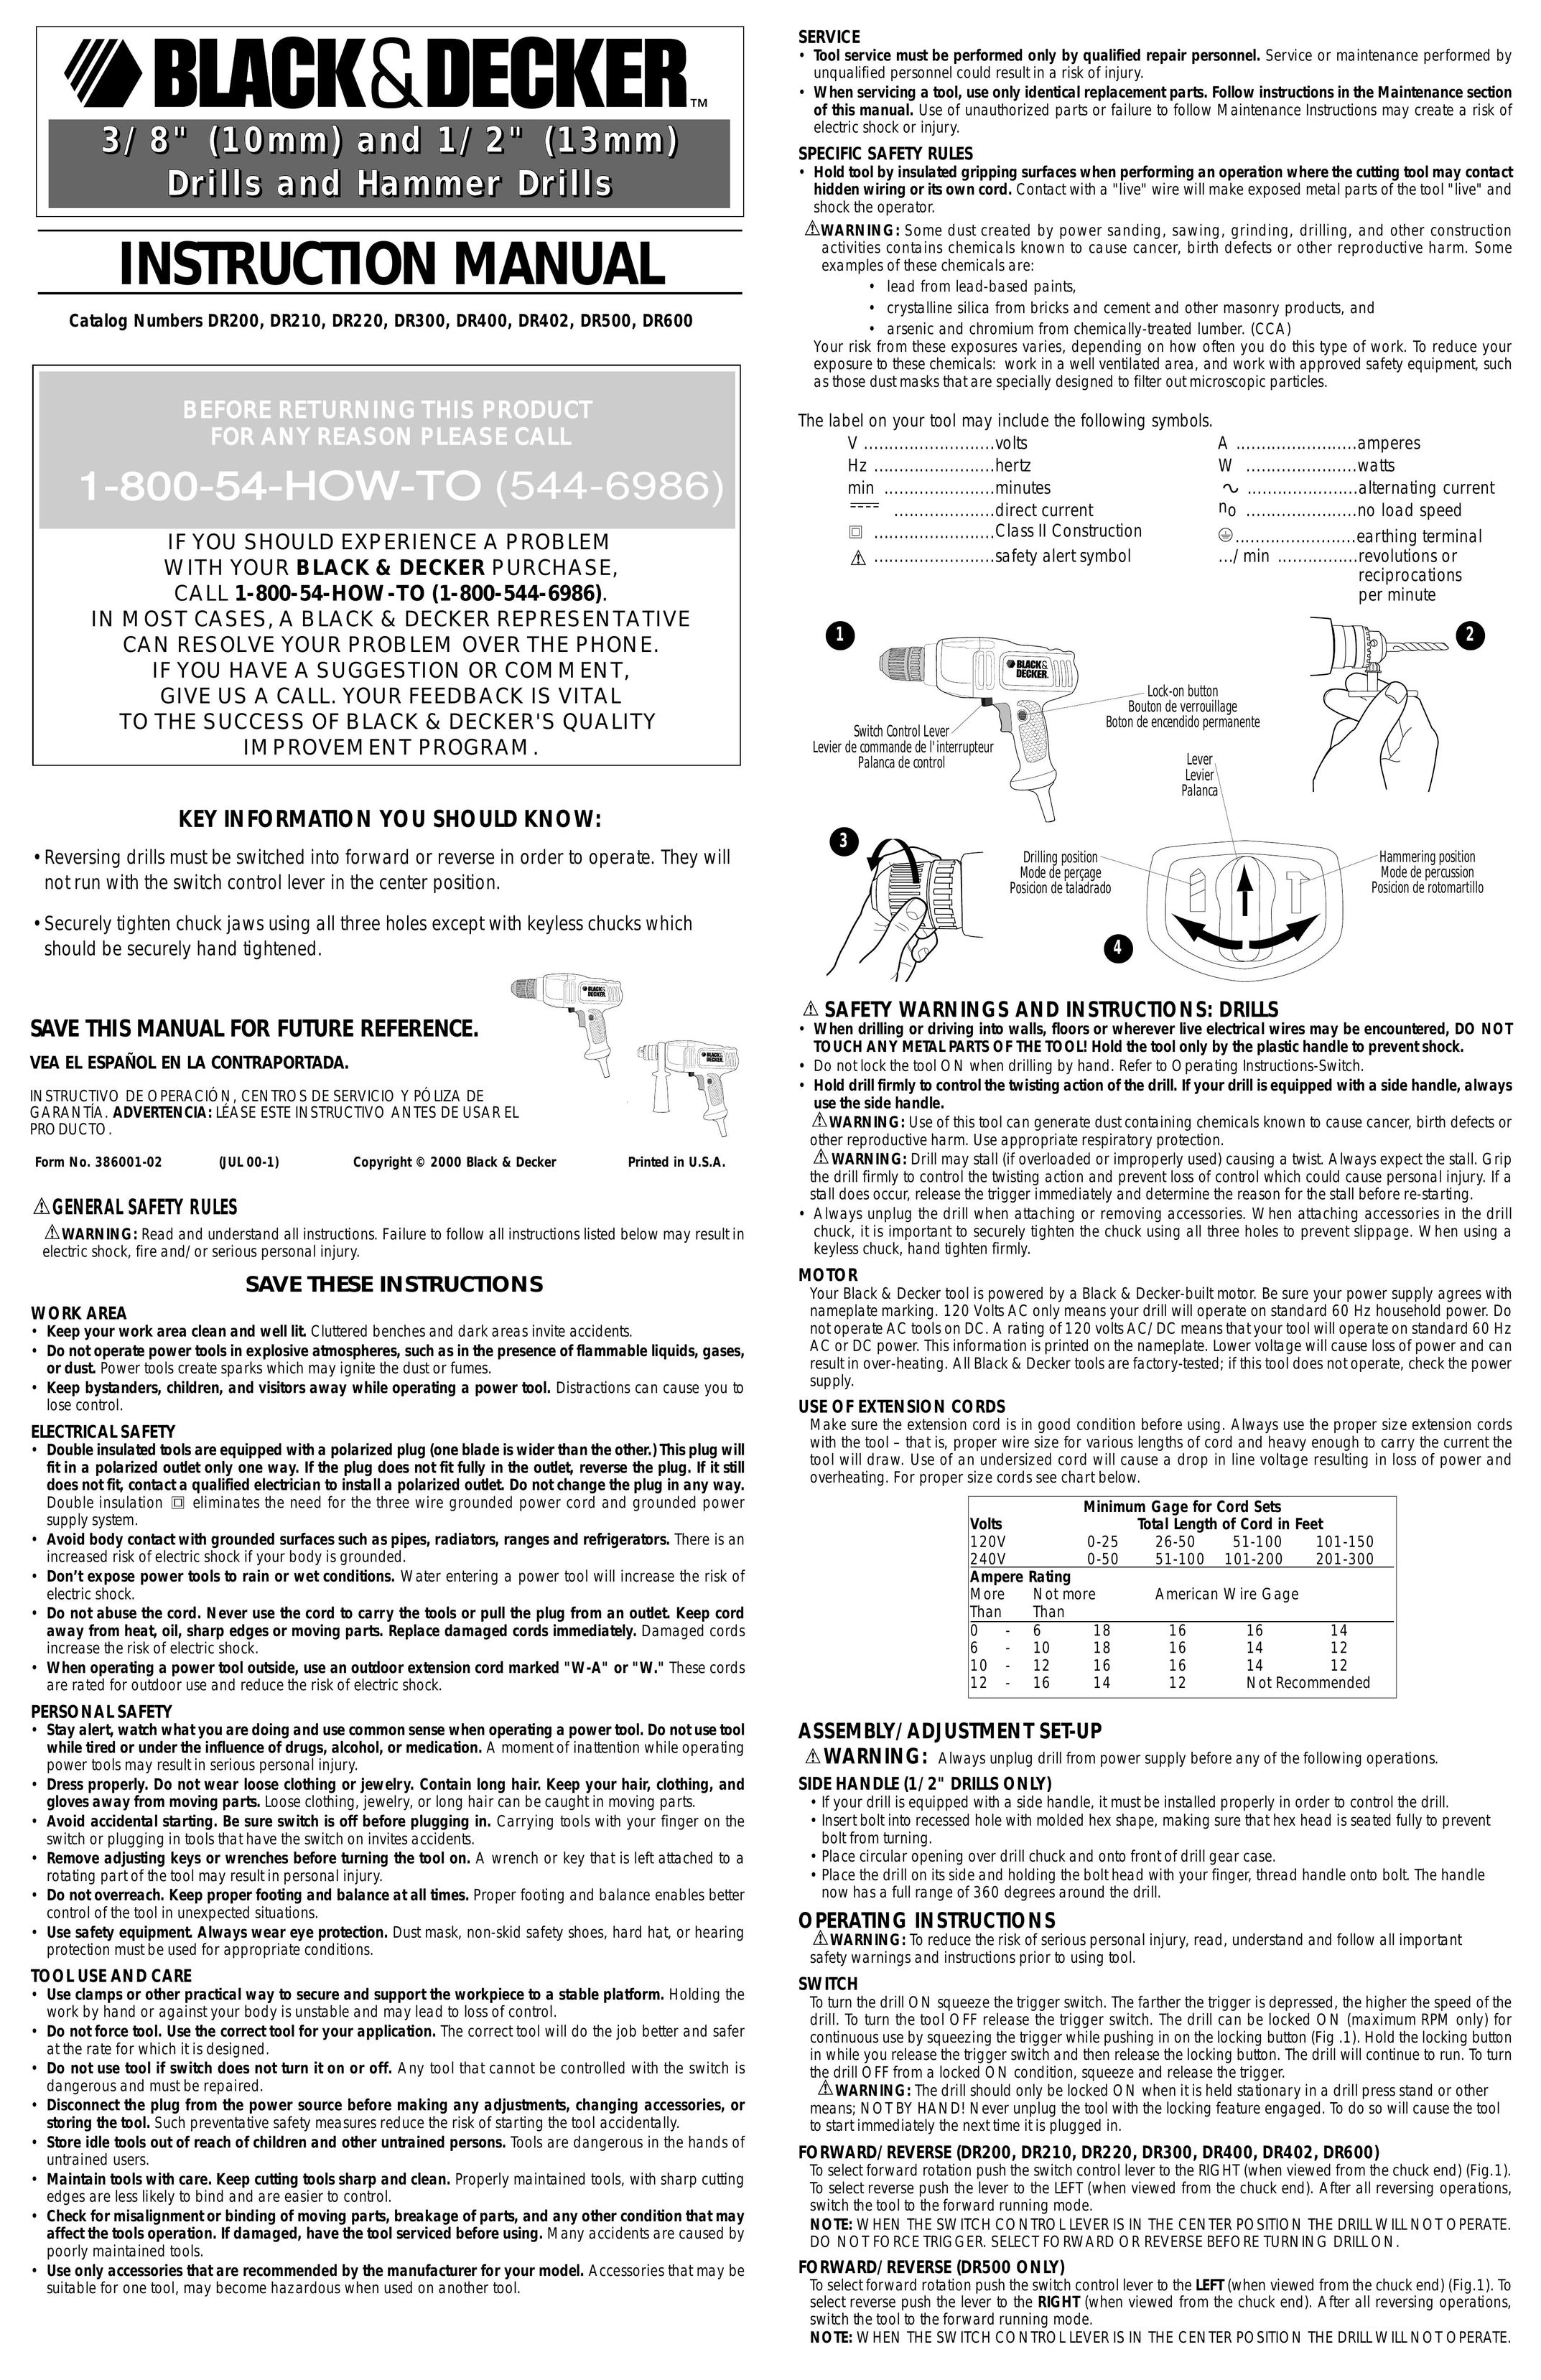 Black & Decker 386001-02 Drill User Manual